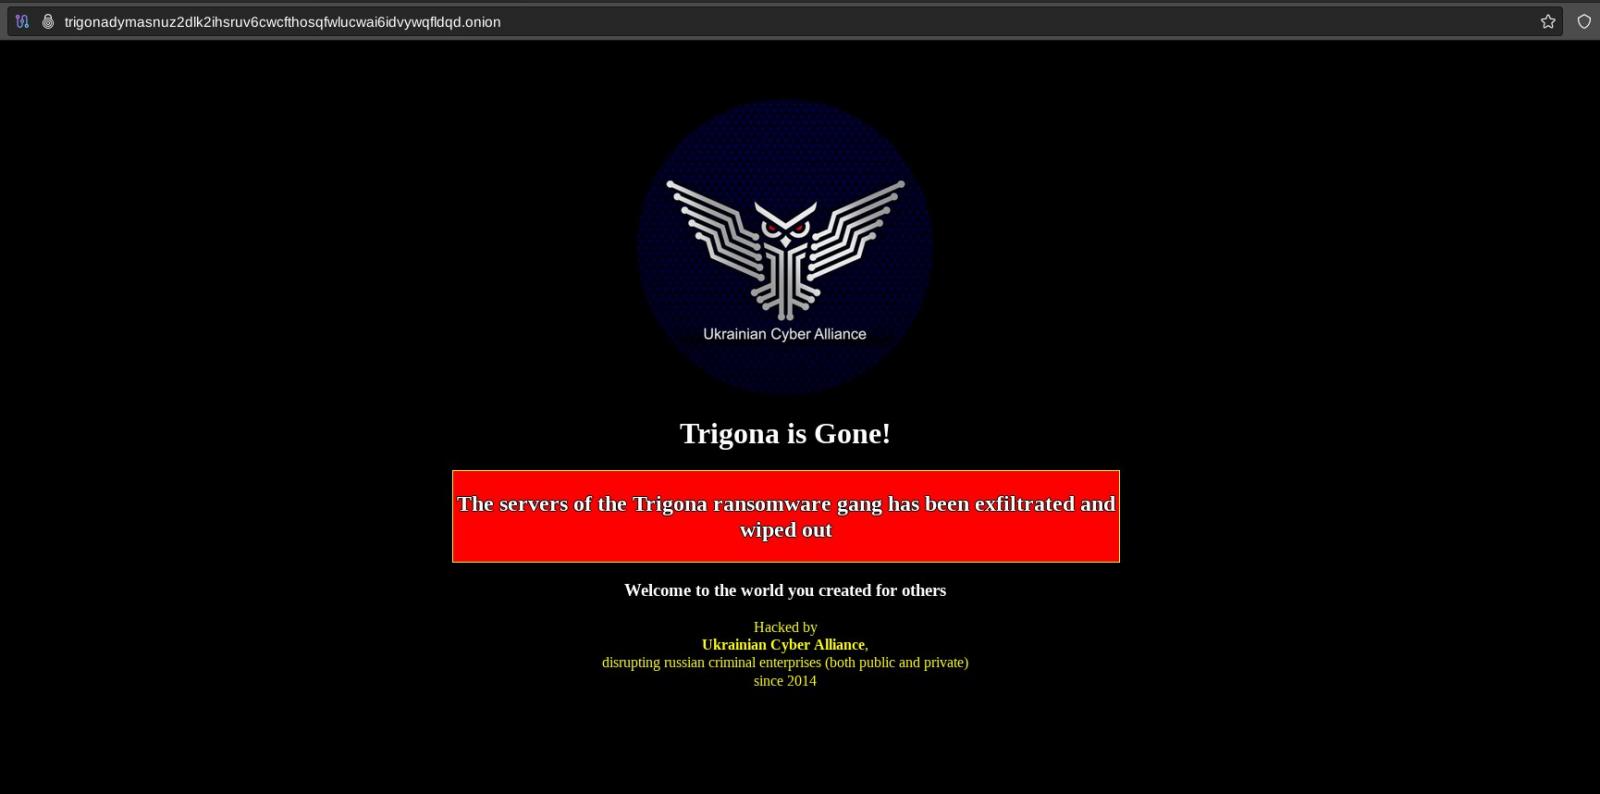 Ukrainian Cyber Alliance defaces Trigona ransomware website 